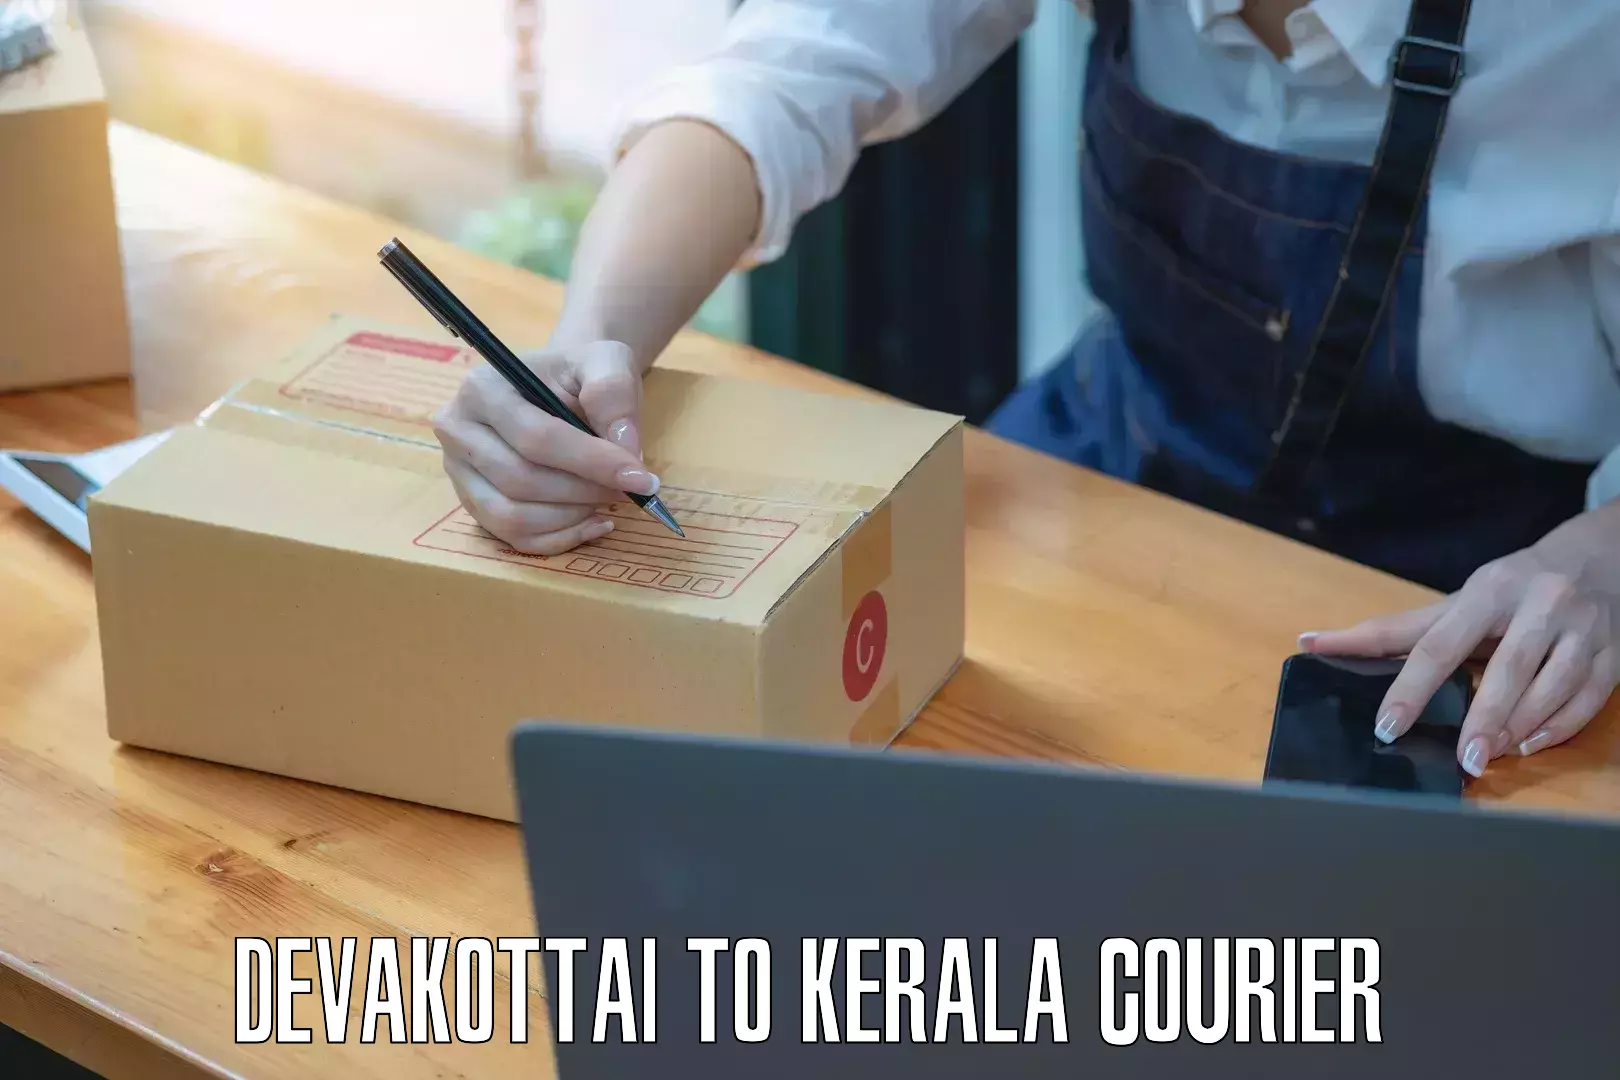 Reliable delivery network Devakottai to Kerala